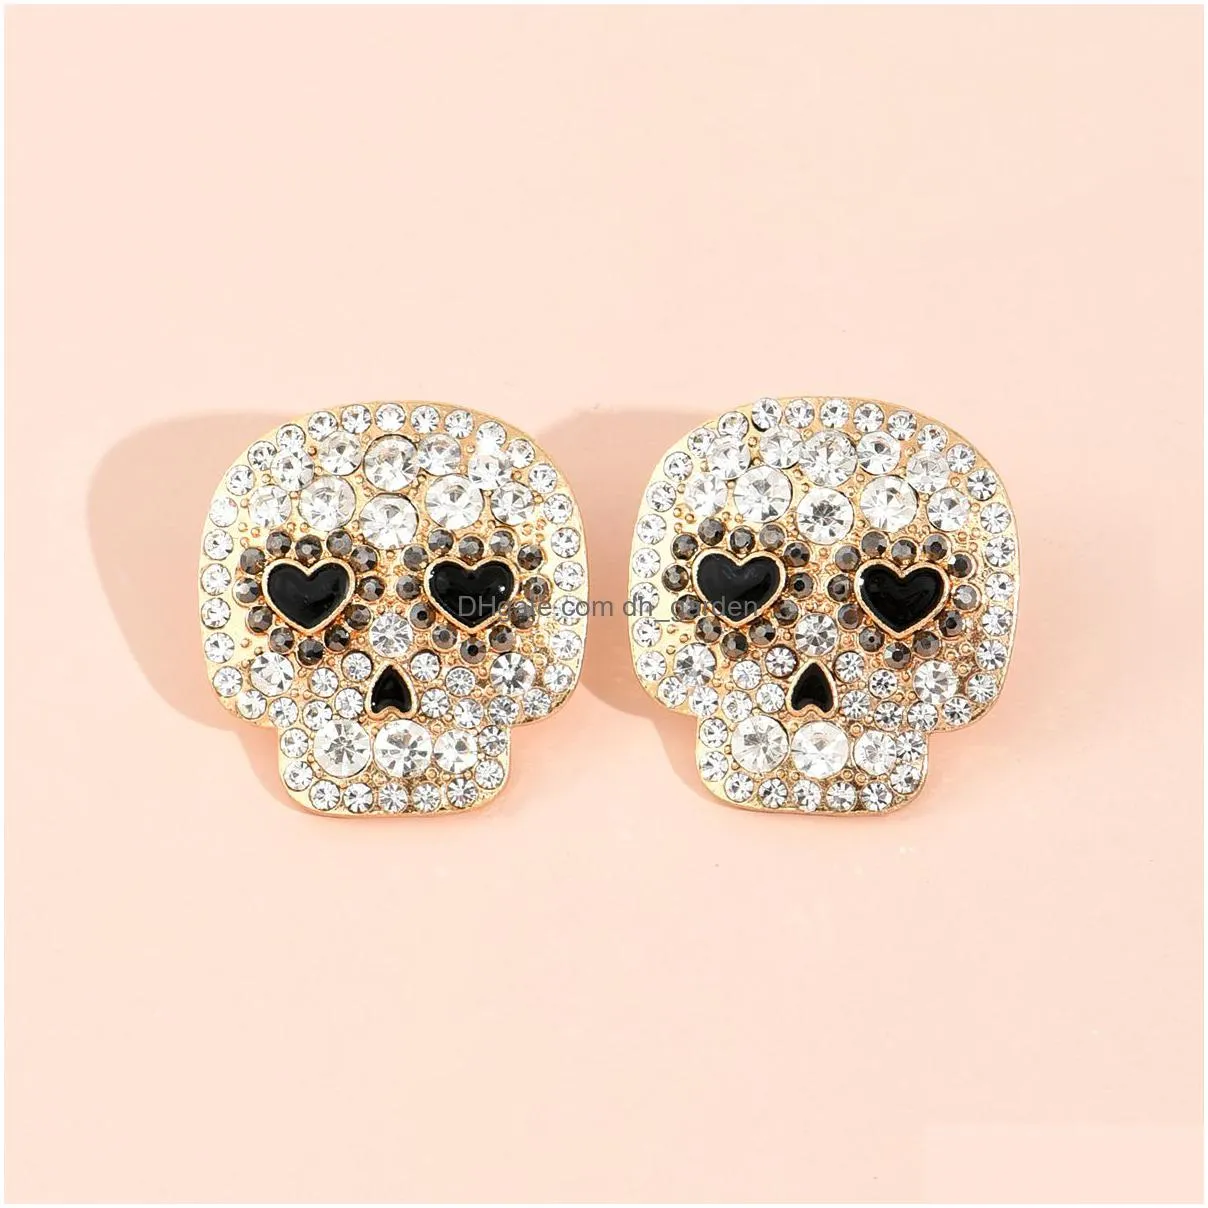 charm european and american crossborder new halloween trend personality skull inlaid brick love eye rhinestone earrings